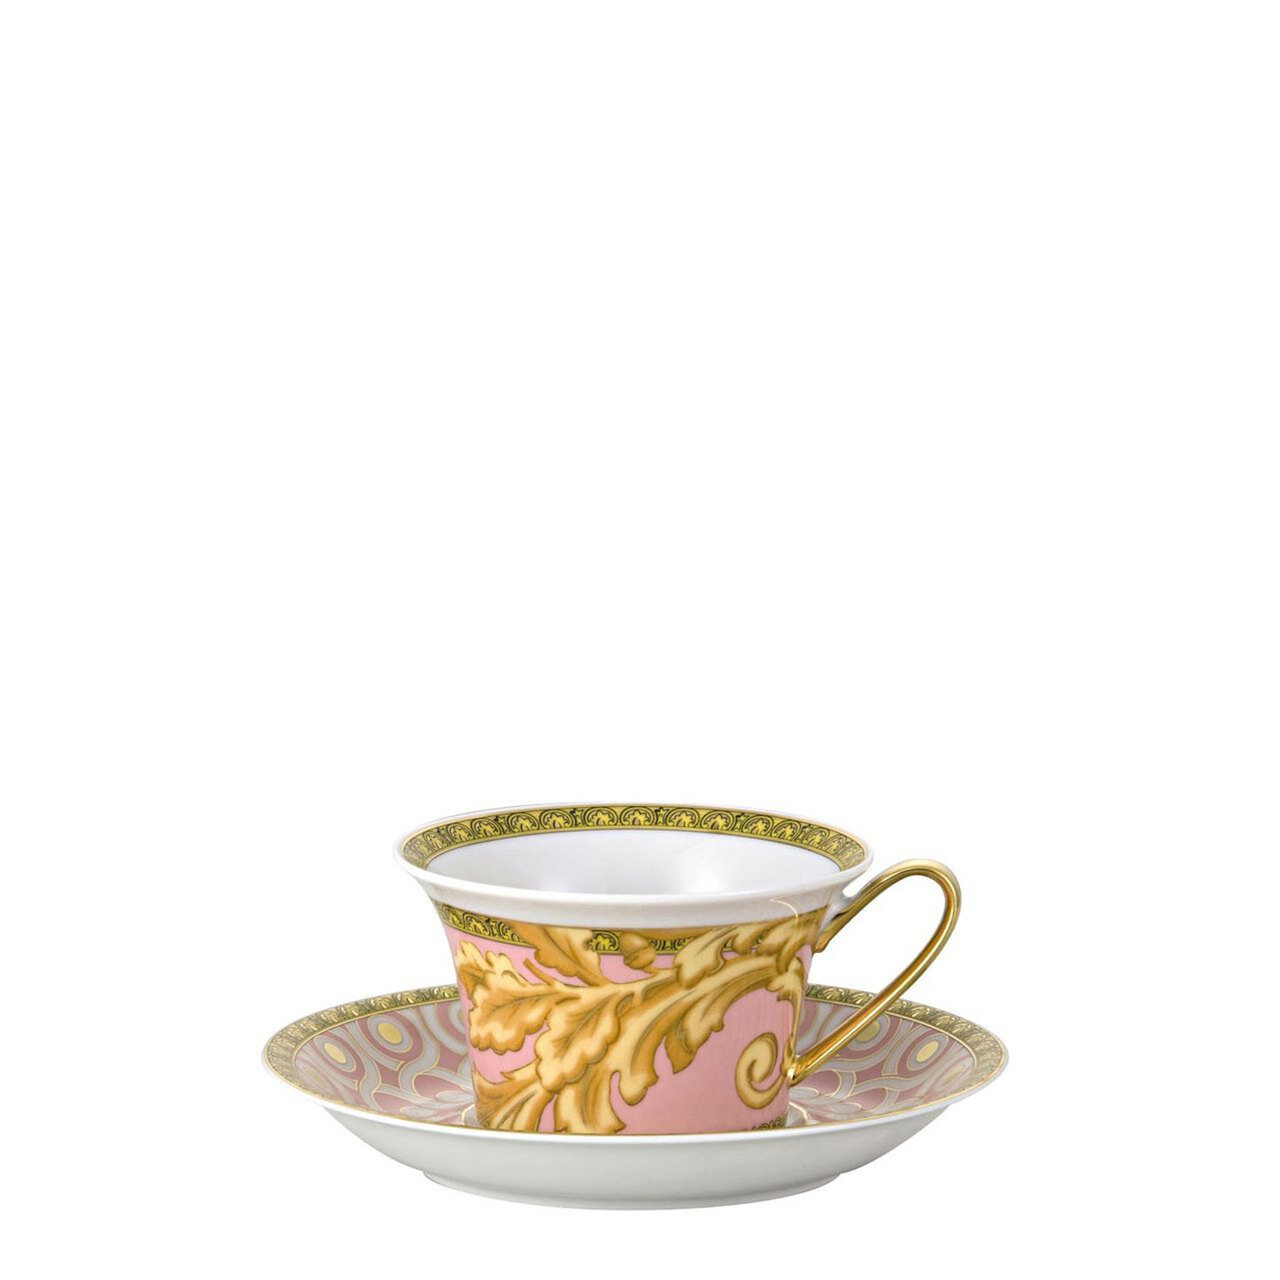 Versace Byzantine Dreams Tea Cup and Saucer 7 oz.